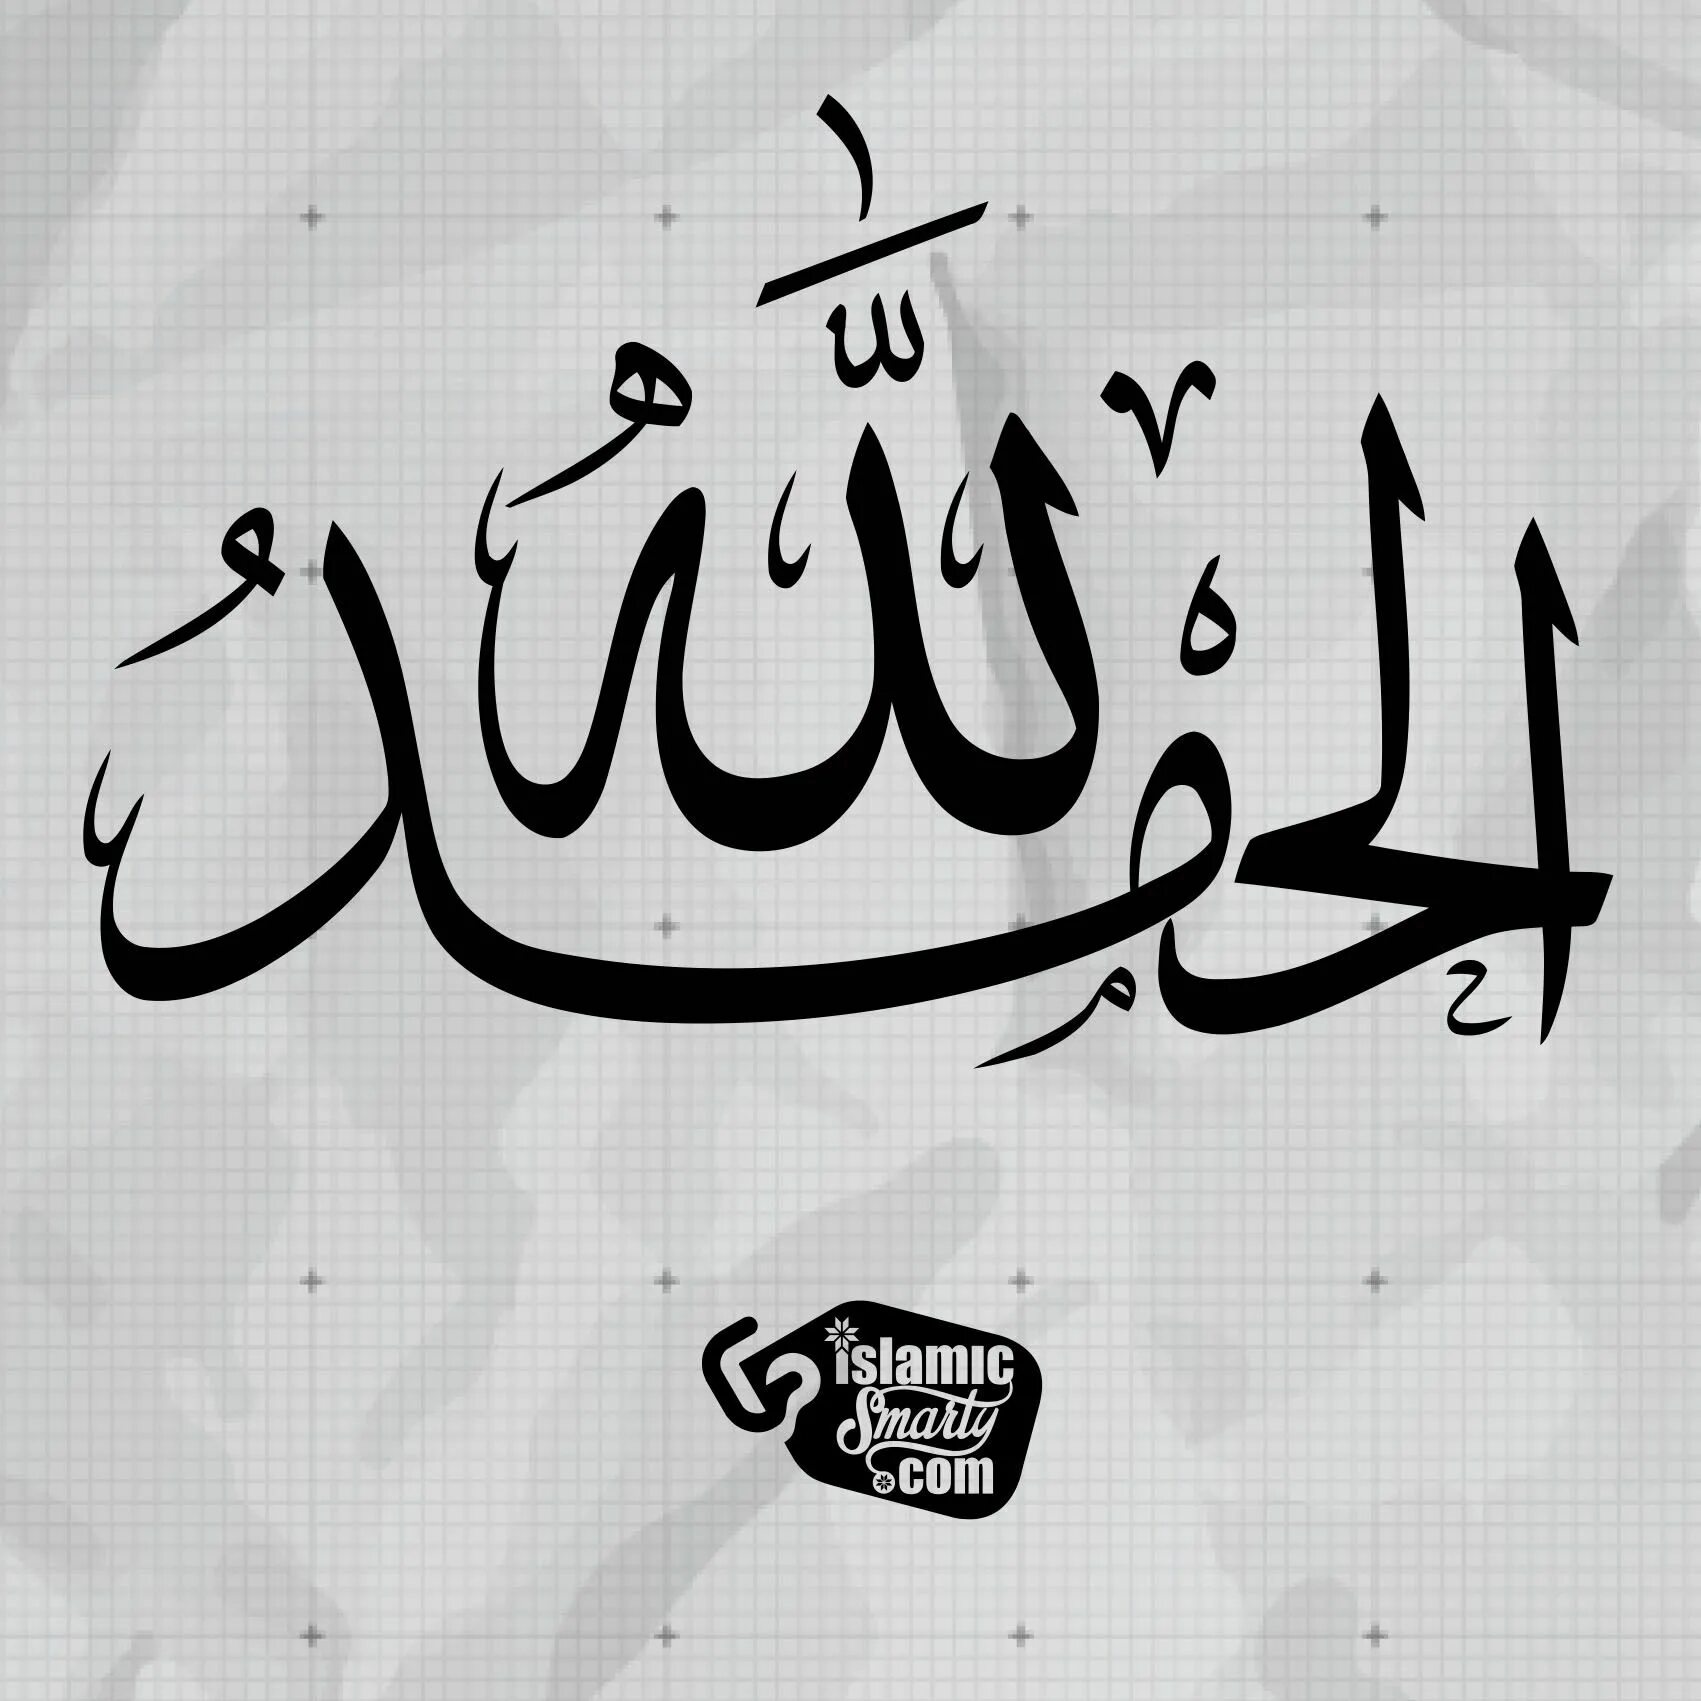 Как пишется альхамдулиллах. Арабская каллиграфия Alhamdulillah. АЛЬХАМДУЛИЛЛЯХ каллиграфия. Альхамдулиллах на арабском каллиграфия.